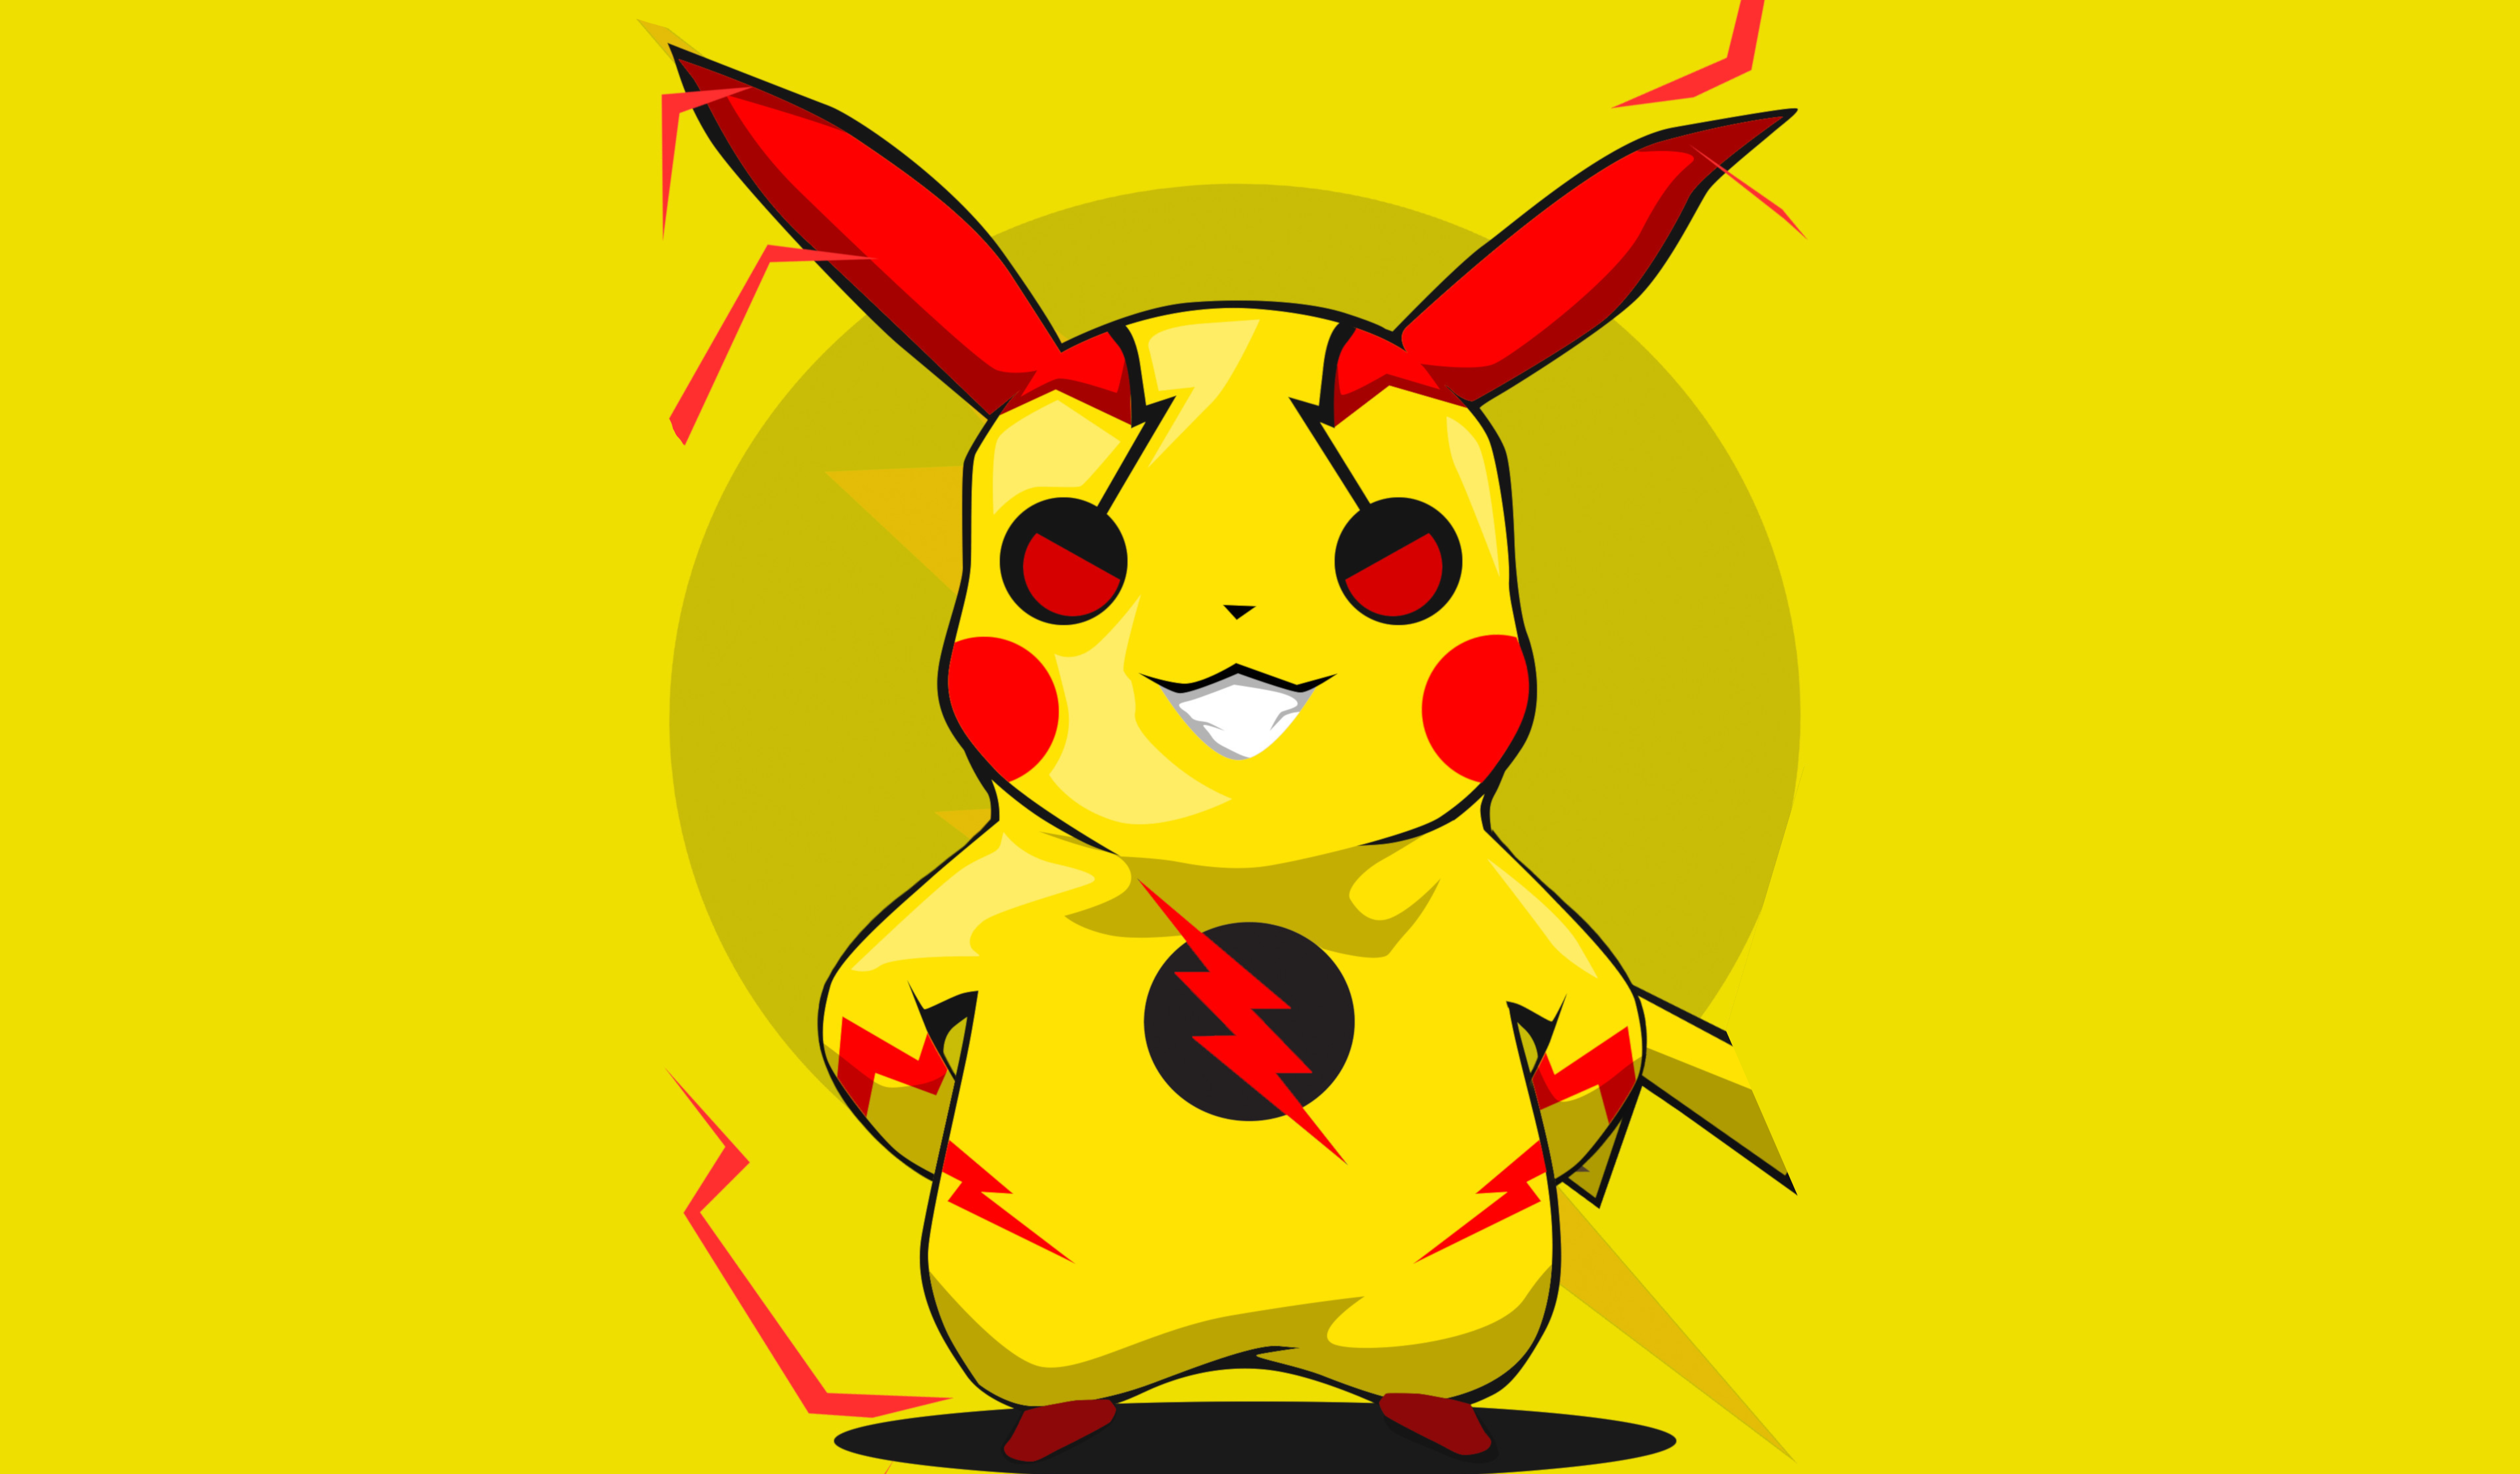 fond d'écran de pikachu,dessin animé,rouge,jaune,dessin animé,illustration